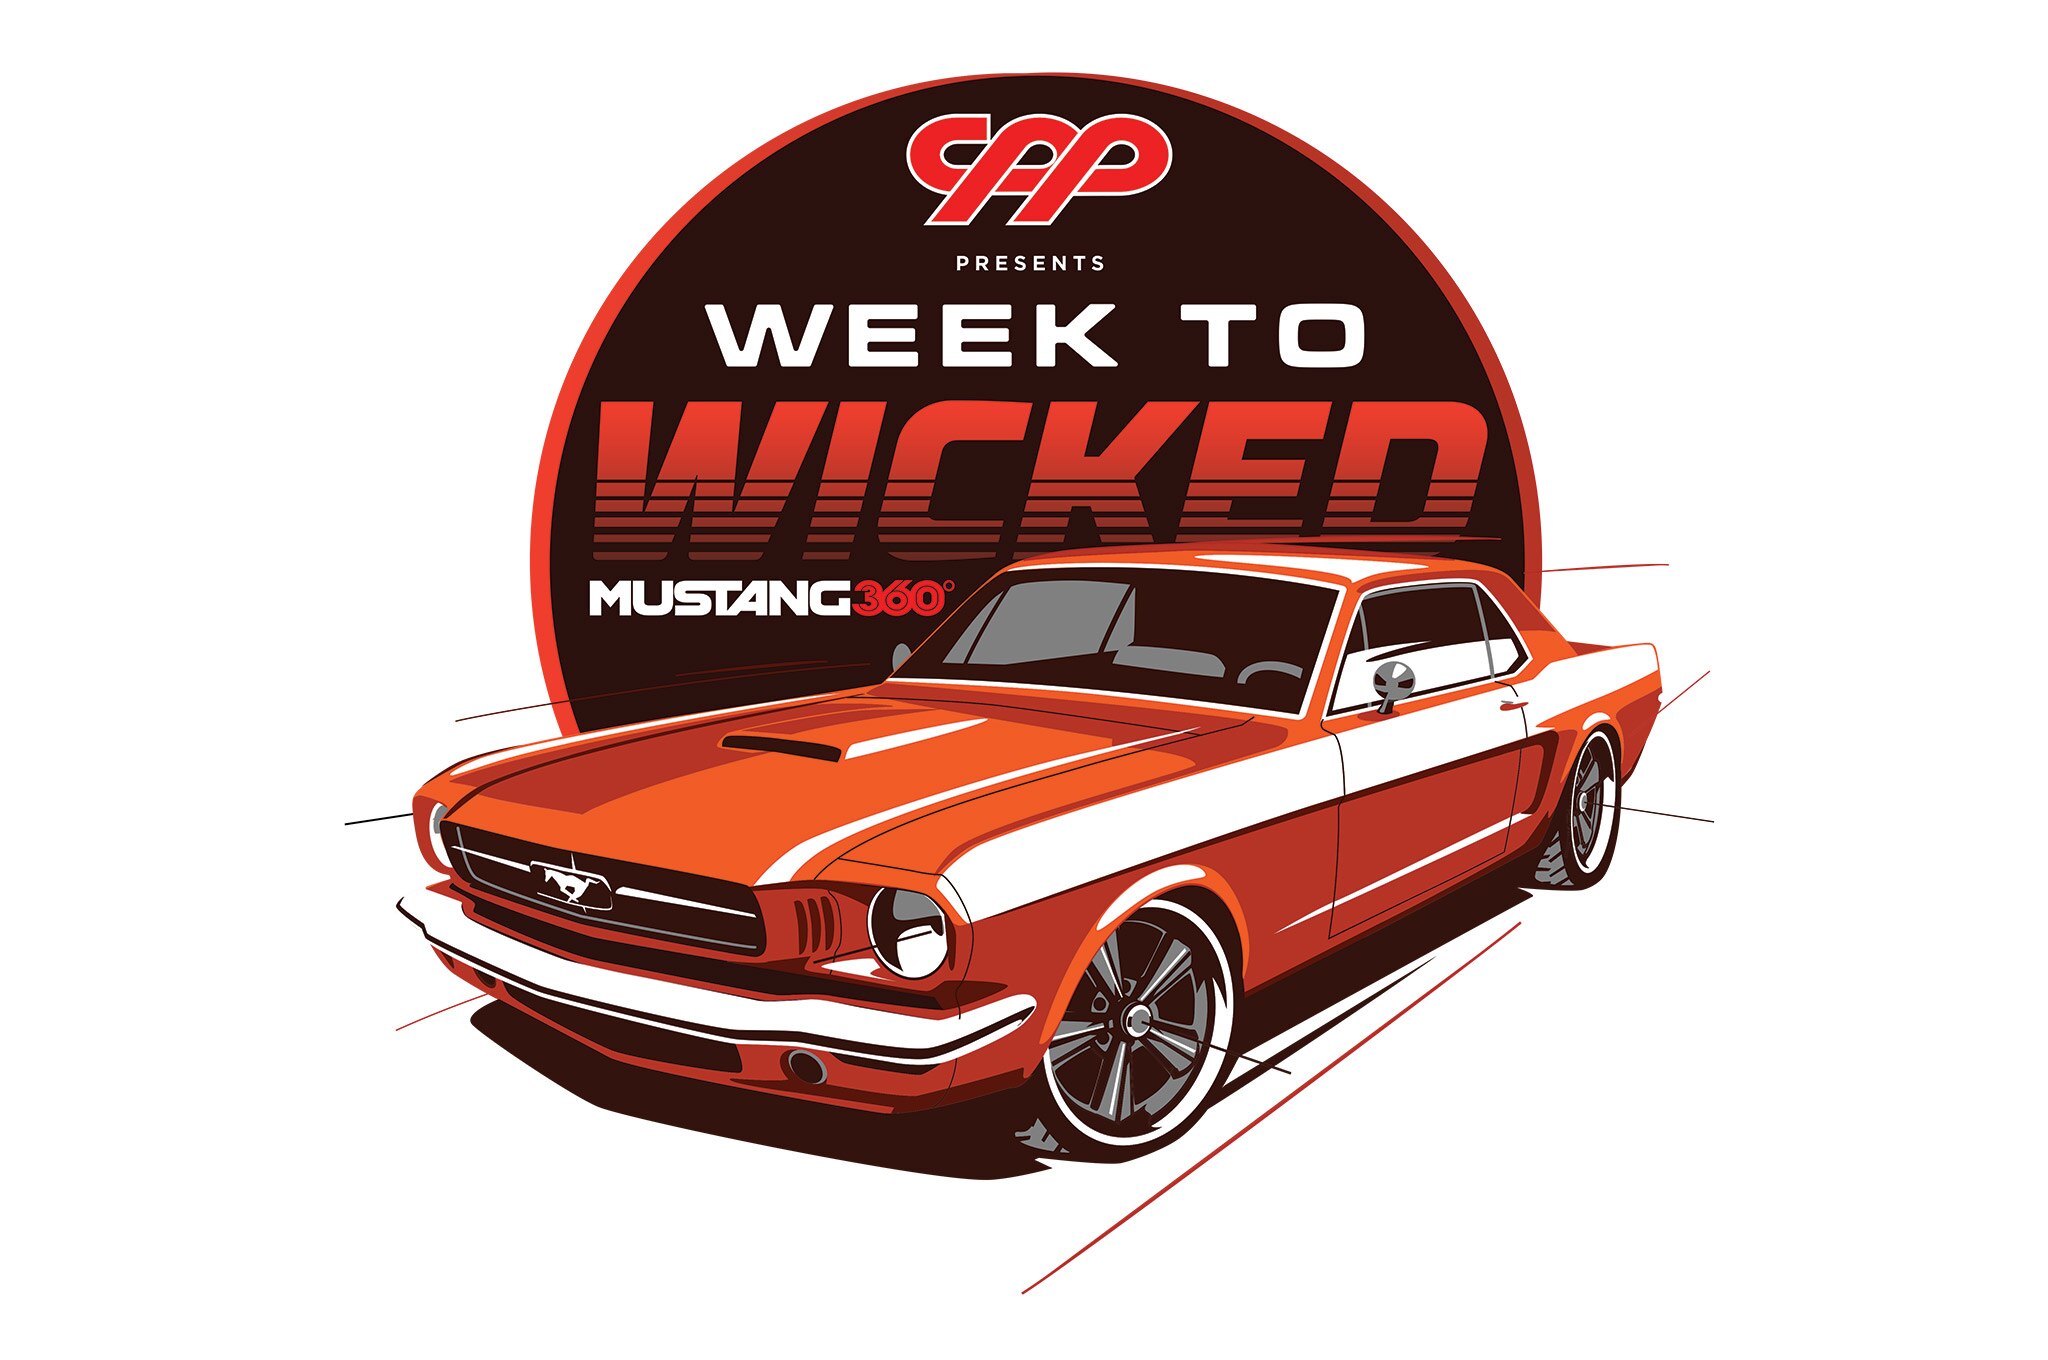 1966 Mustang Restomod Week To Wicked Logo